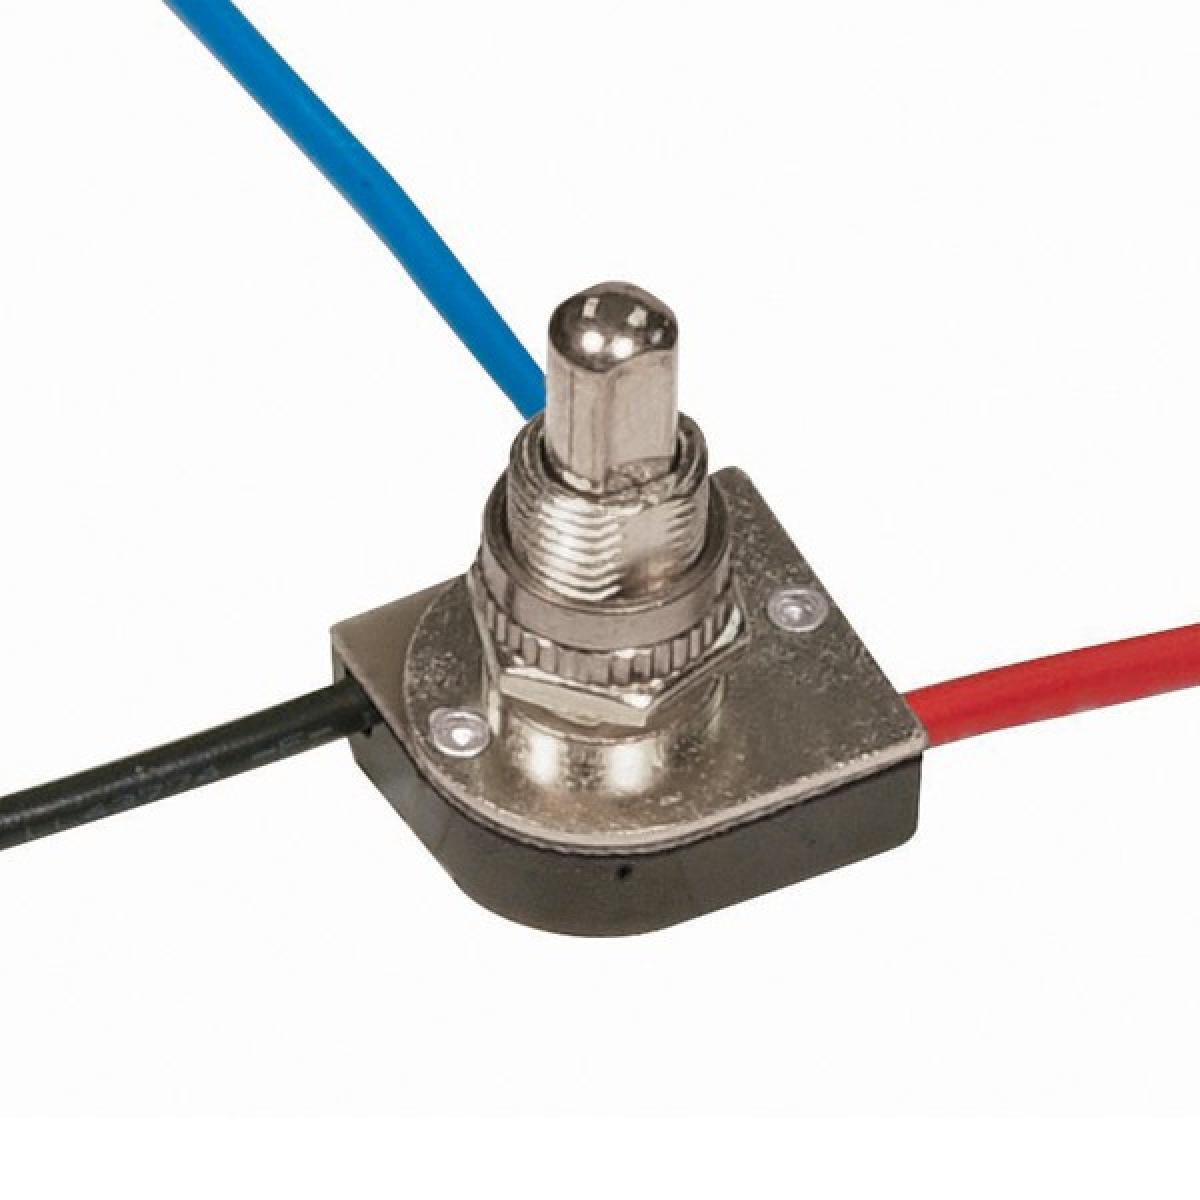 Satco 90-1679 3-Way Metal Push Switch 3/8 Metal Bushing 2 Circuit 4 Position (L-1, L-2, L1-2, Off) 6A-125V, 3A-250V Rating Nickel Finish